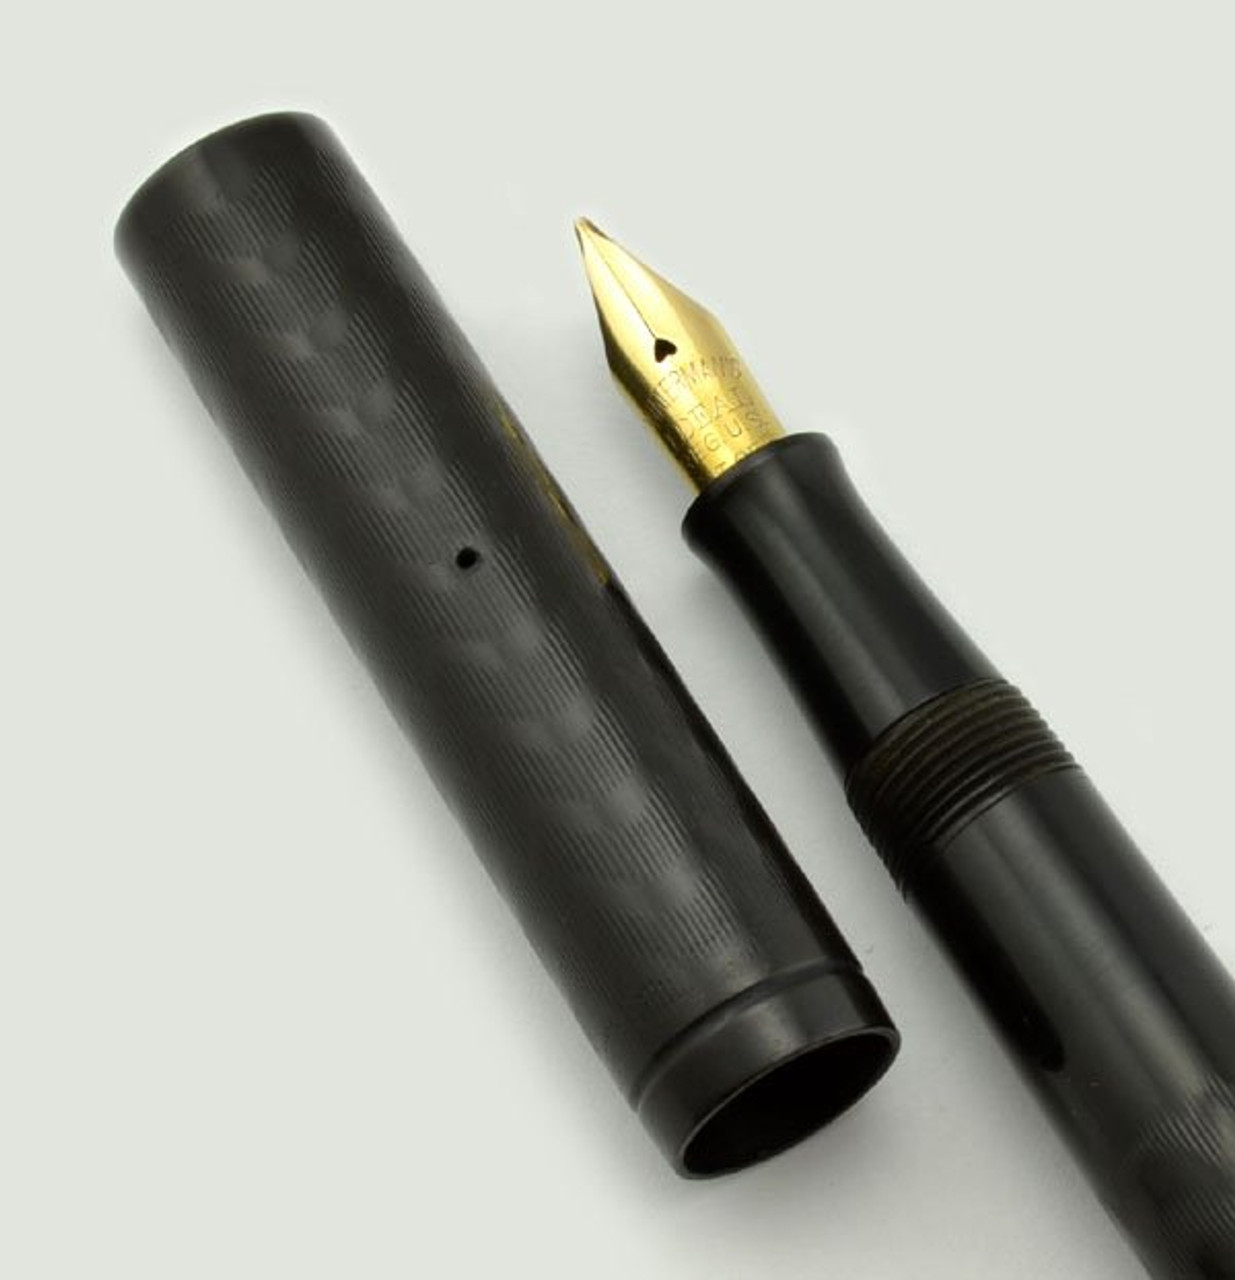 Waterman 52 Fountain Pen - BCHR, Nickel Trim, Full Flex #2 Nib, Missing Clip (Excellent, Restored)